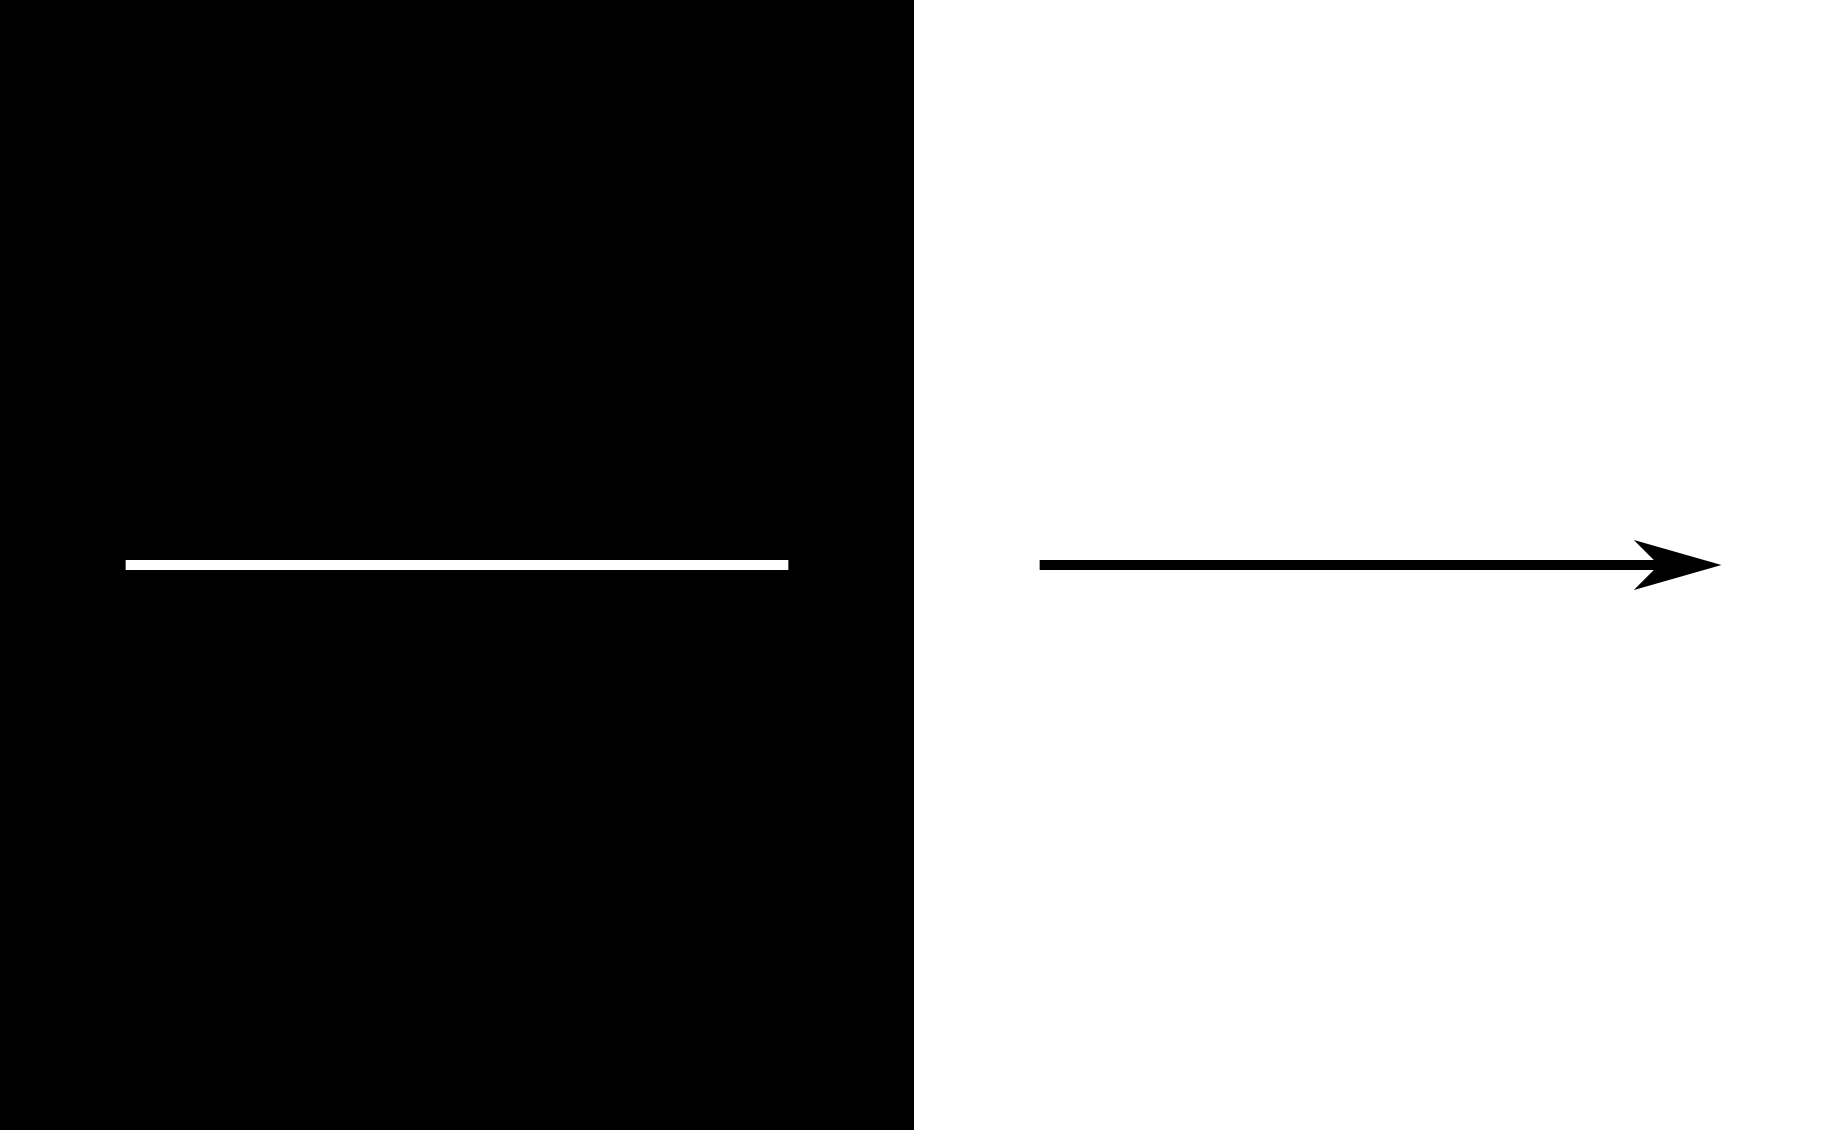 white horizontal line, black horizontal arrow